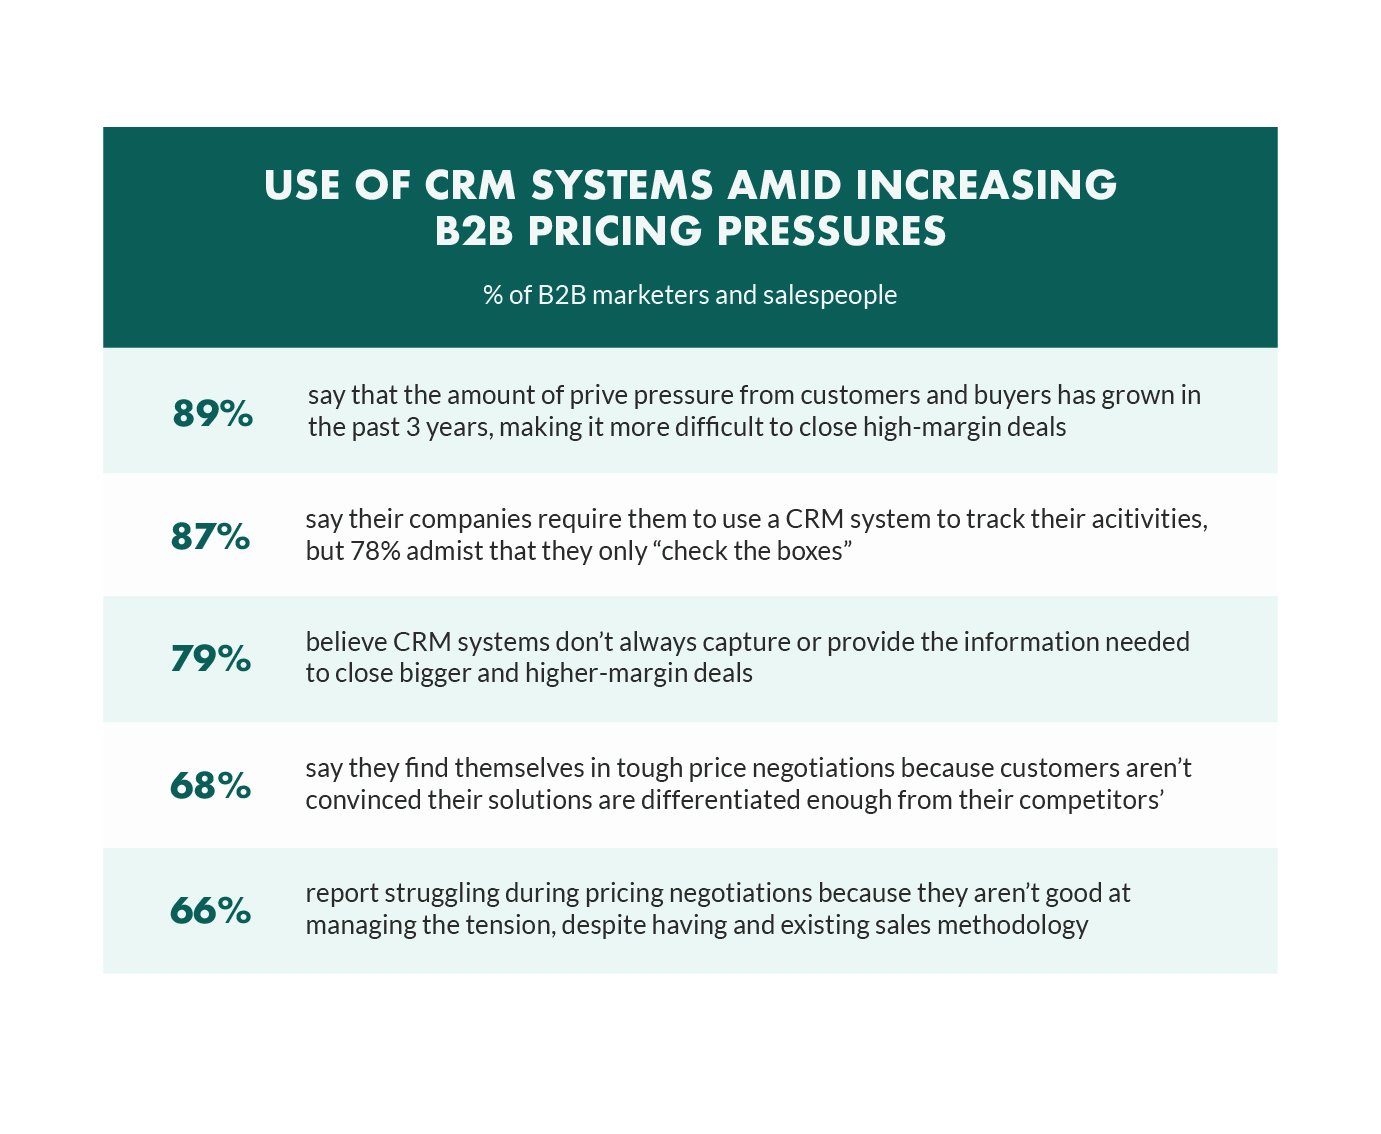 use of CRM amid increasing B2B pricing pressures